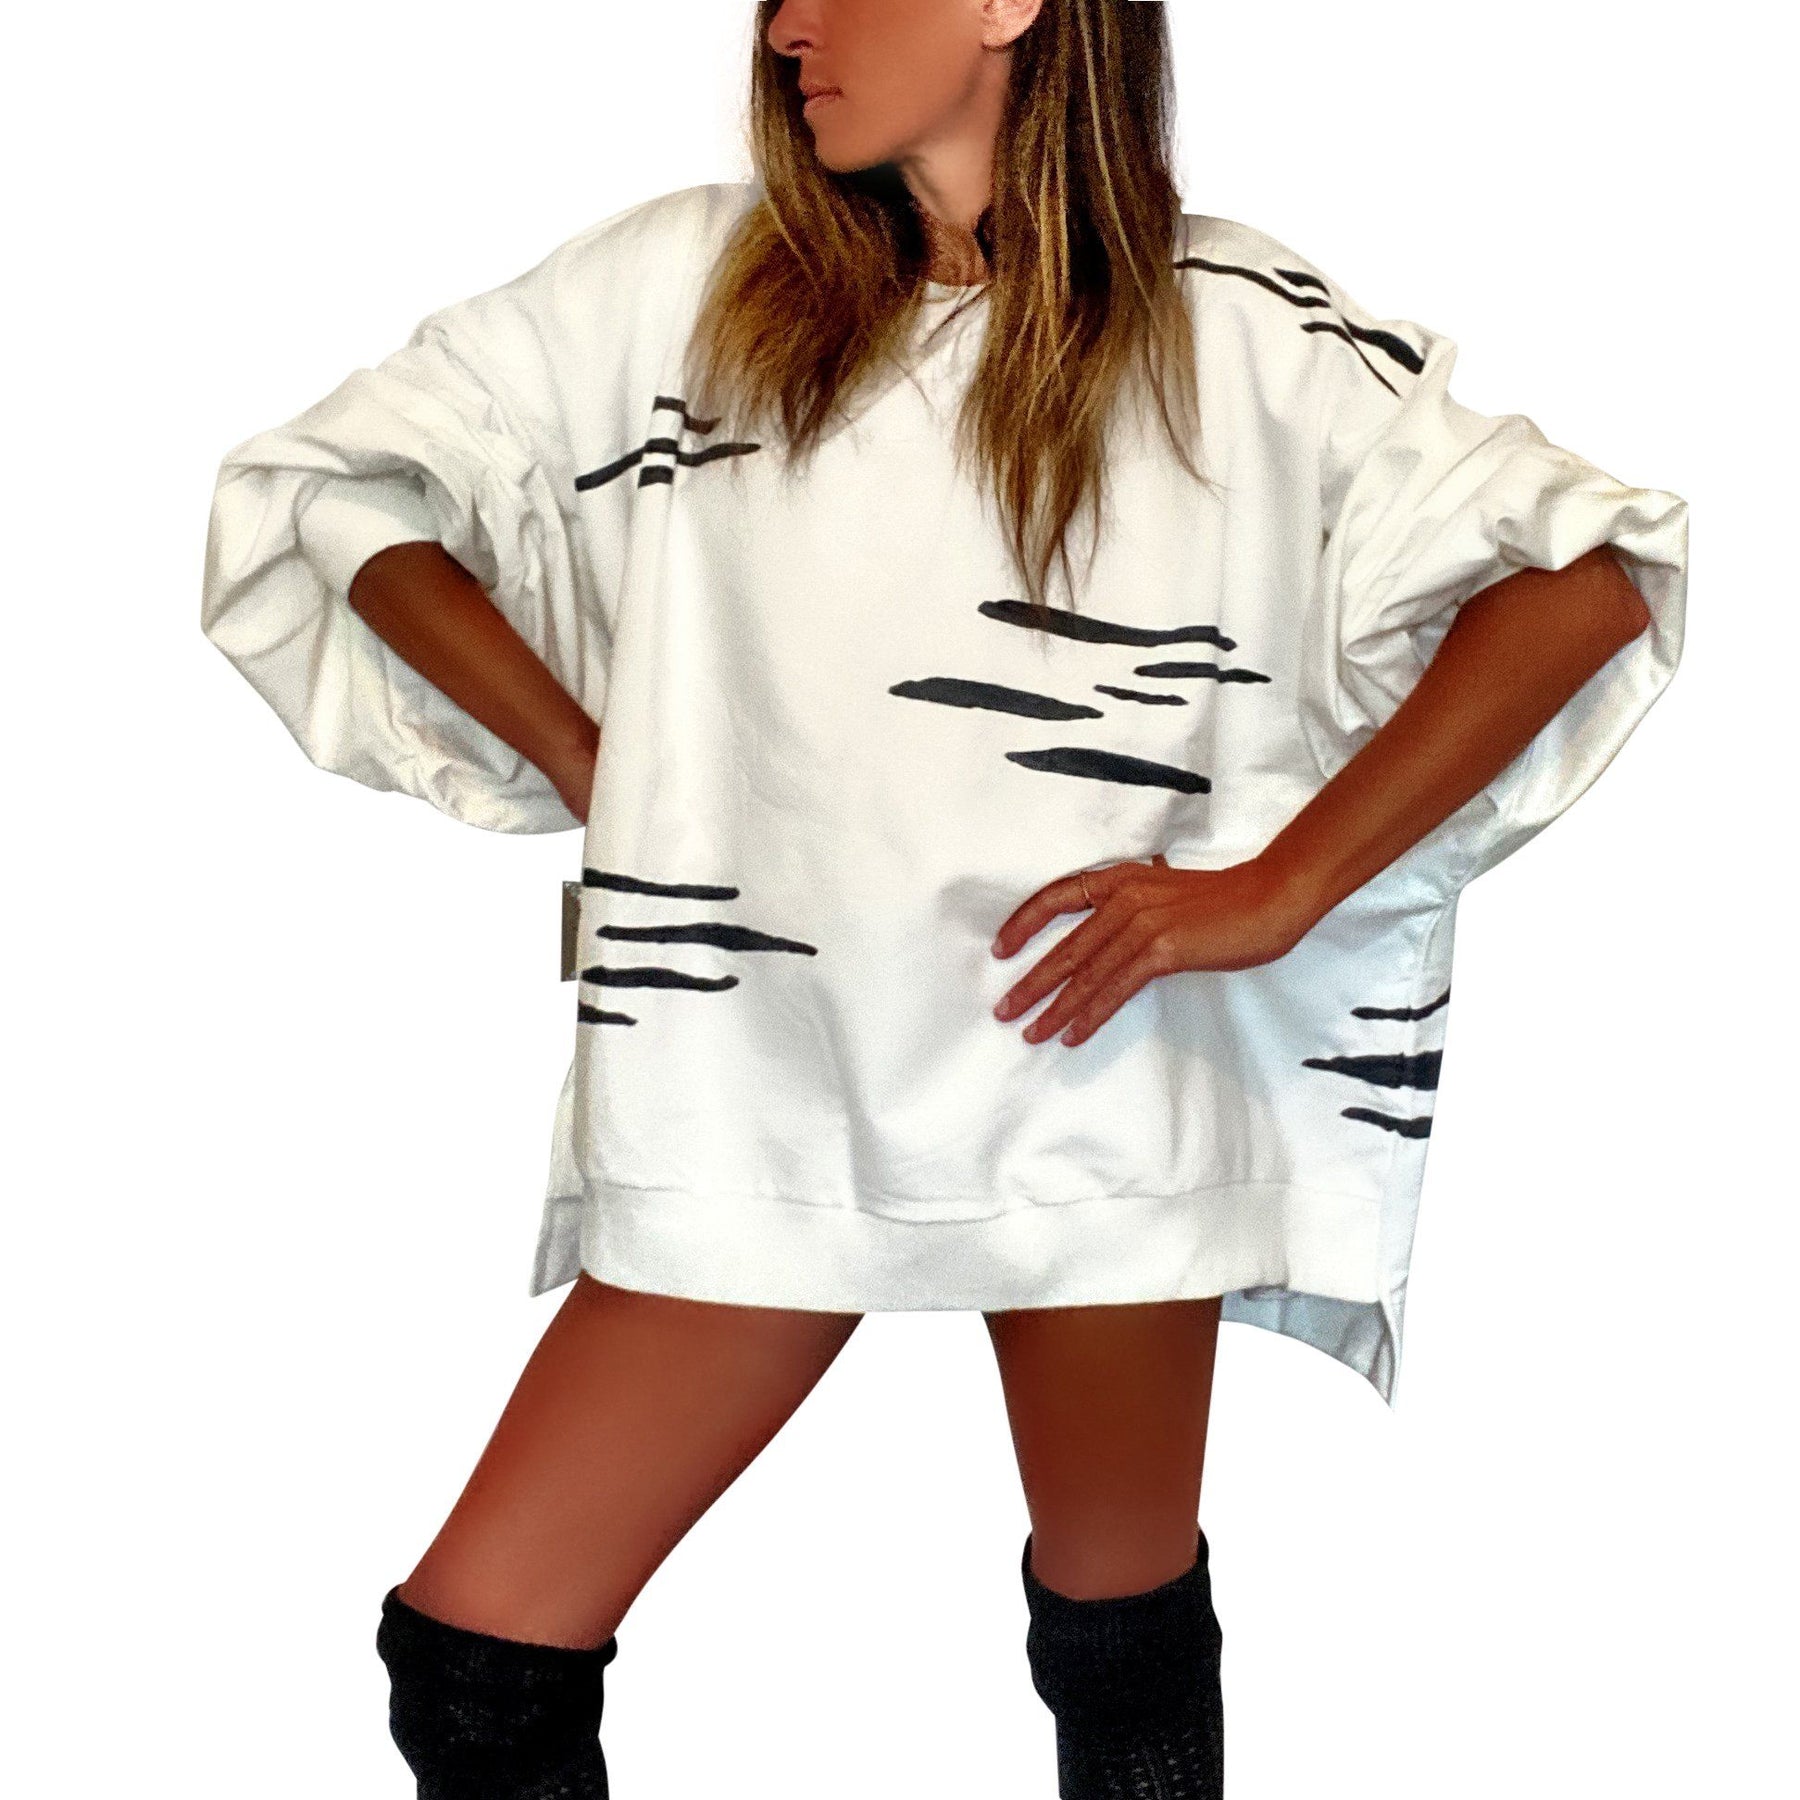 Oversized white crewneck sweatshirt. Zebra pattern painted throughout in black. Signed @wrenandglory.